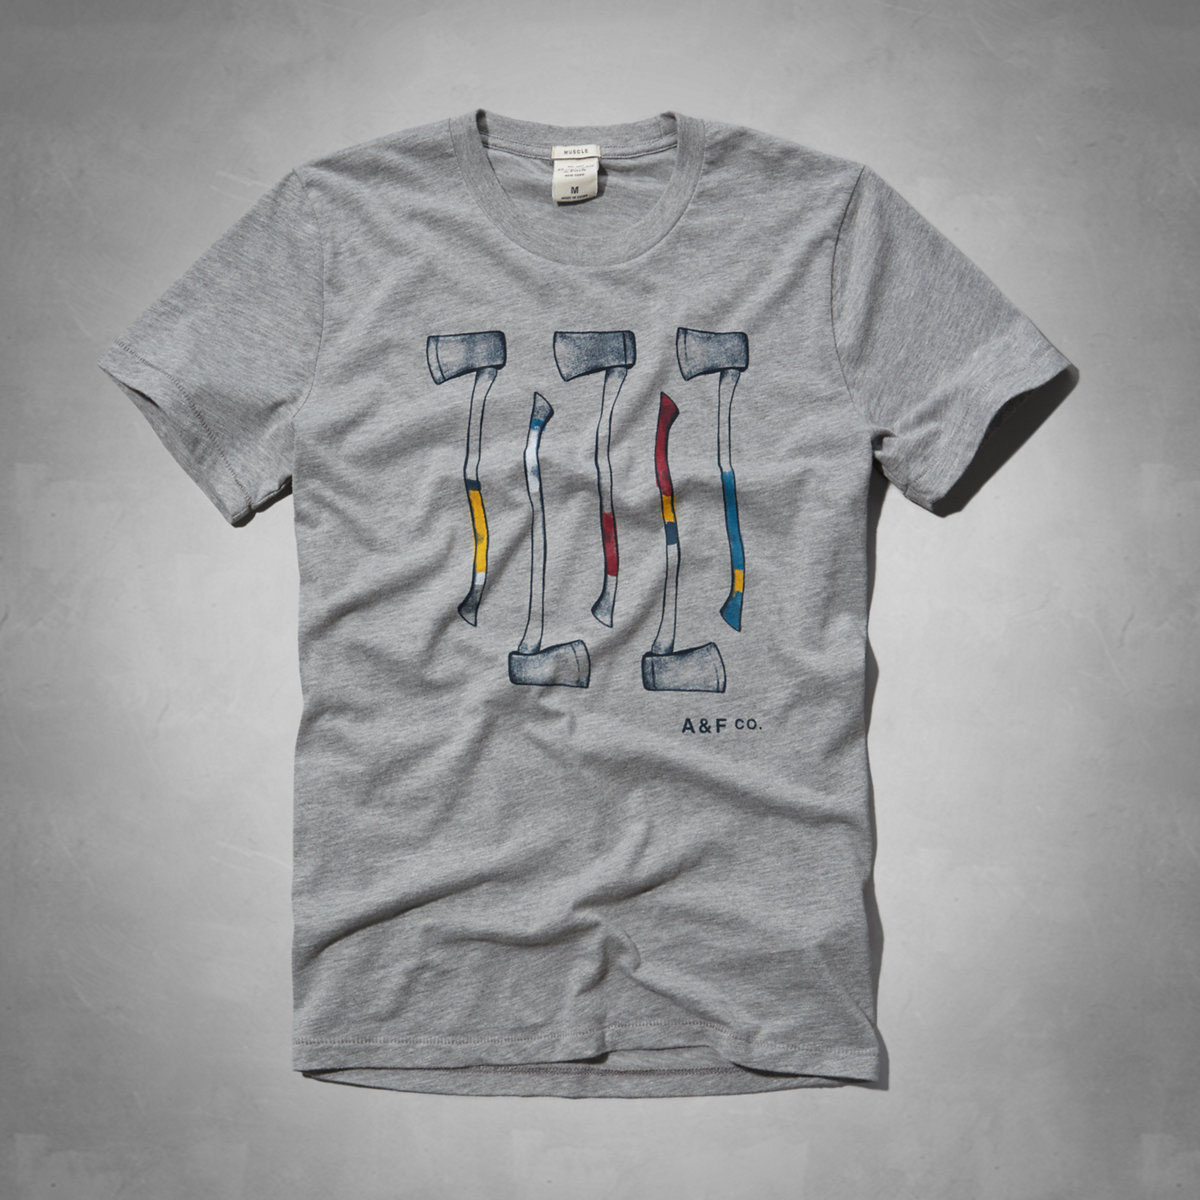 abercrombie t-shirt design